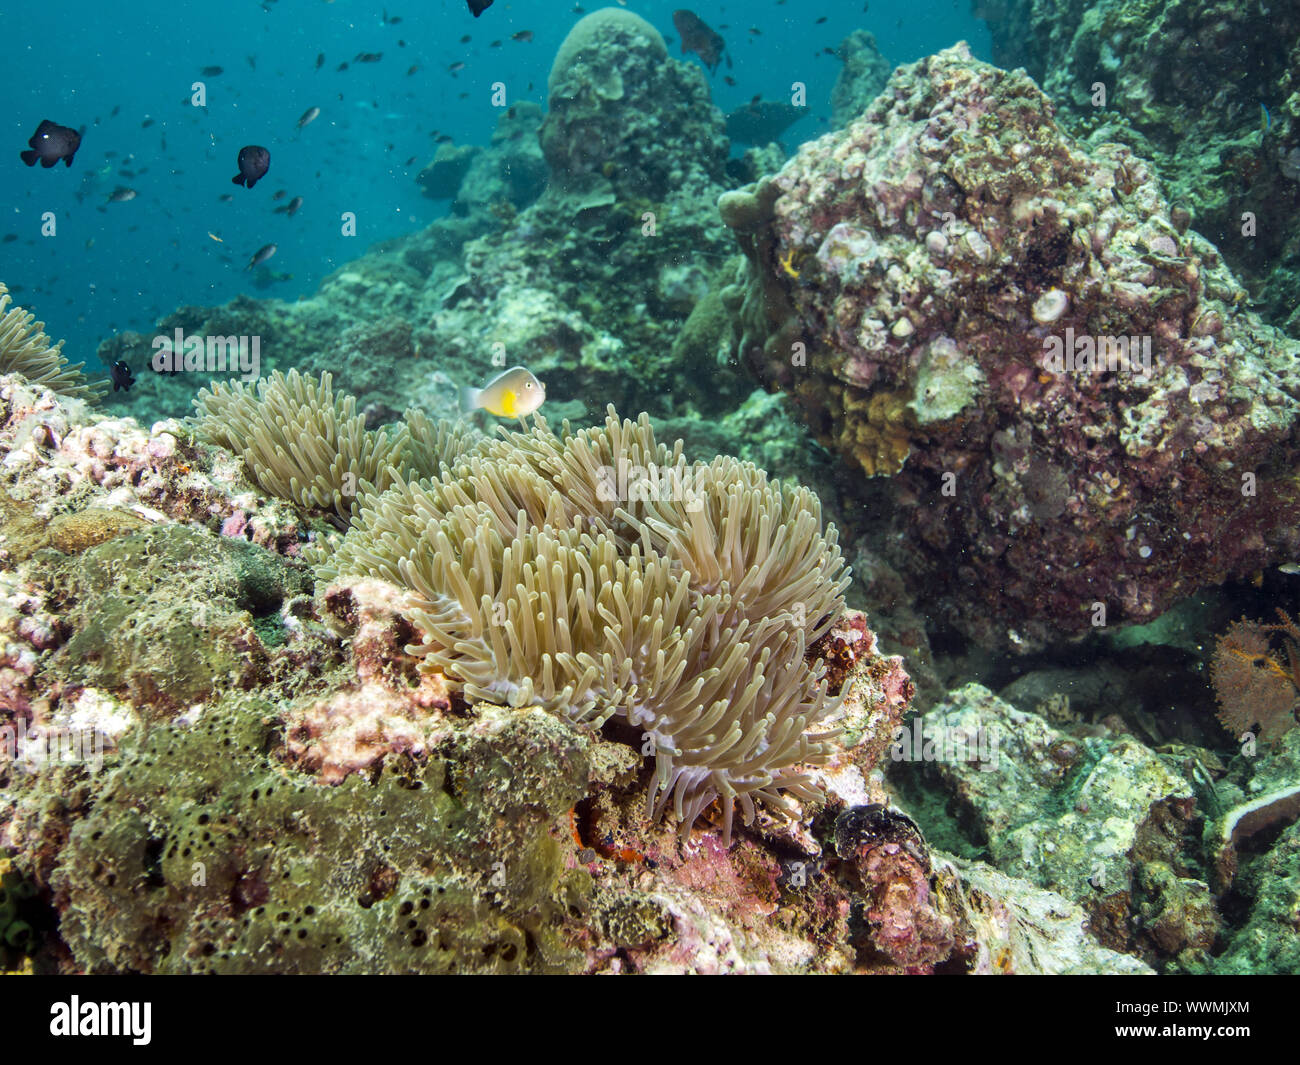 nosestripe anemonefish (Amphiprion akallopisos) Stock Photo